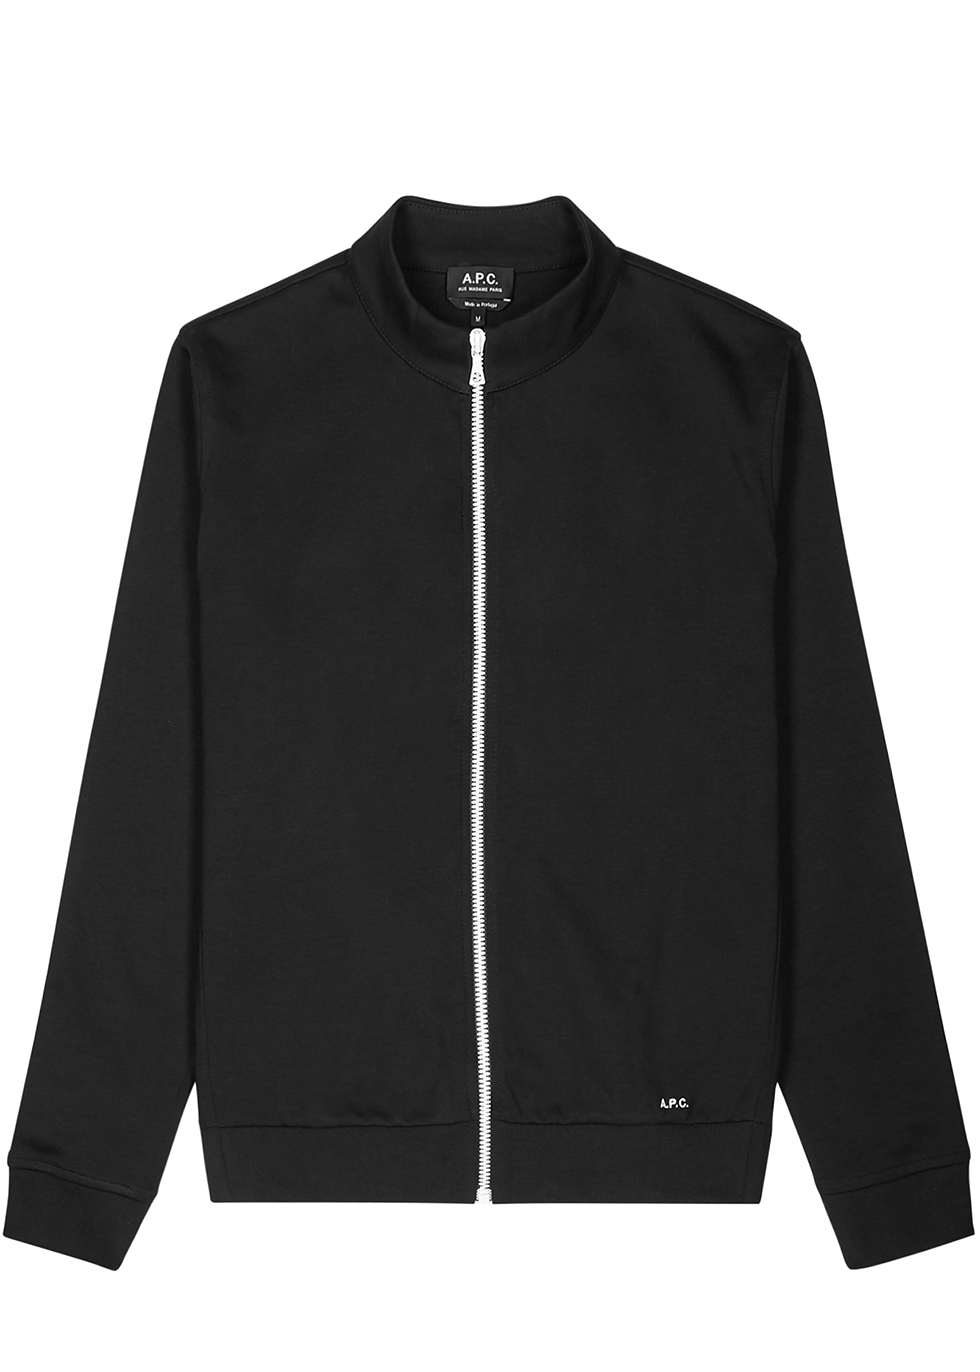 A.P.C. Black cotton-jersey sweatshirt - Harvey Nichols